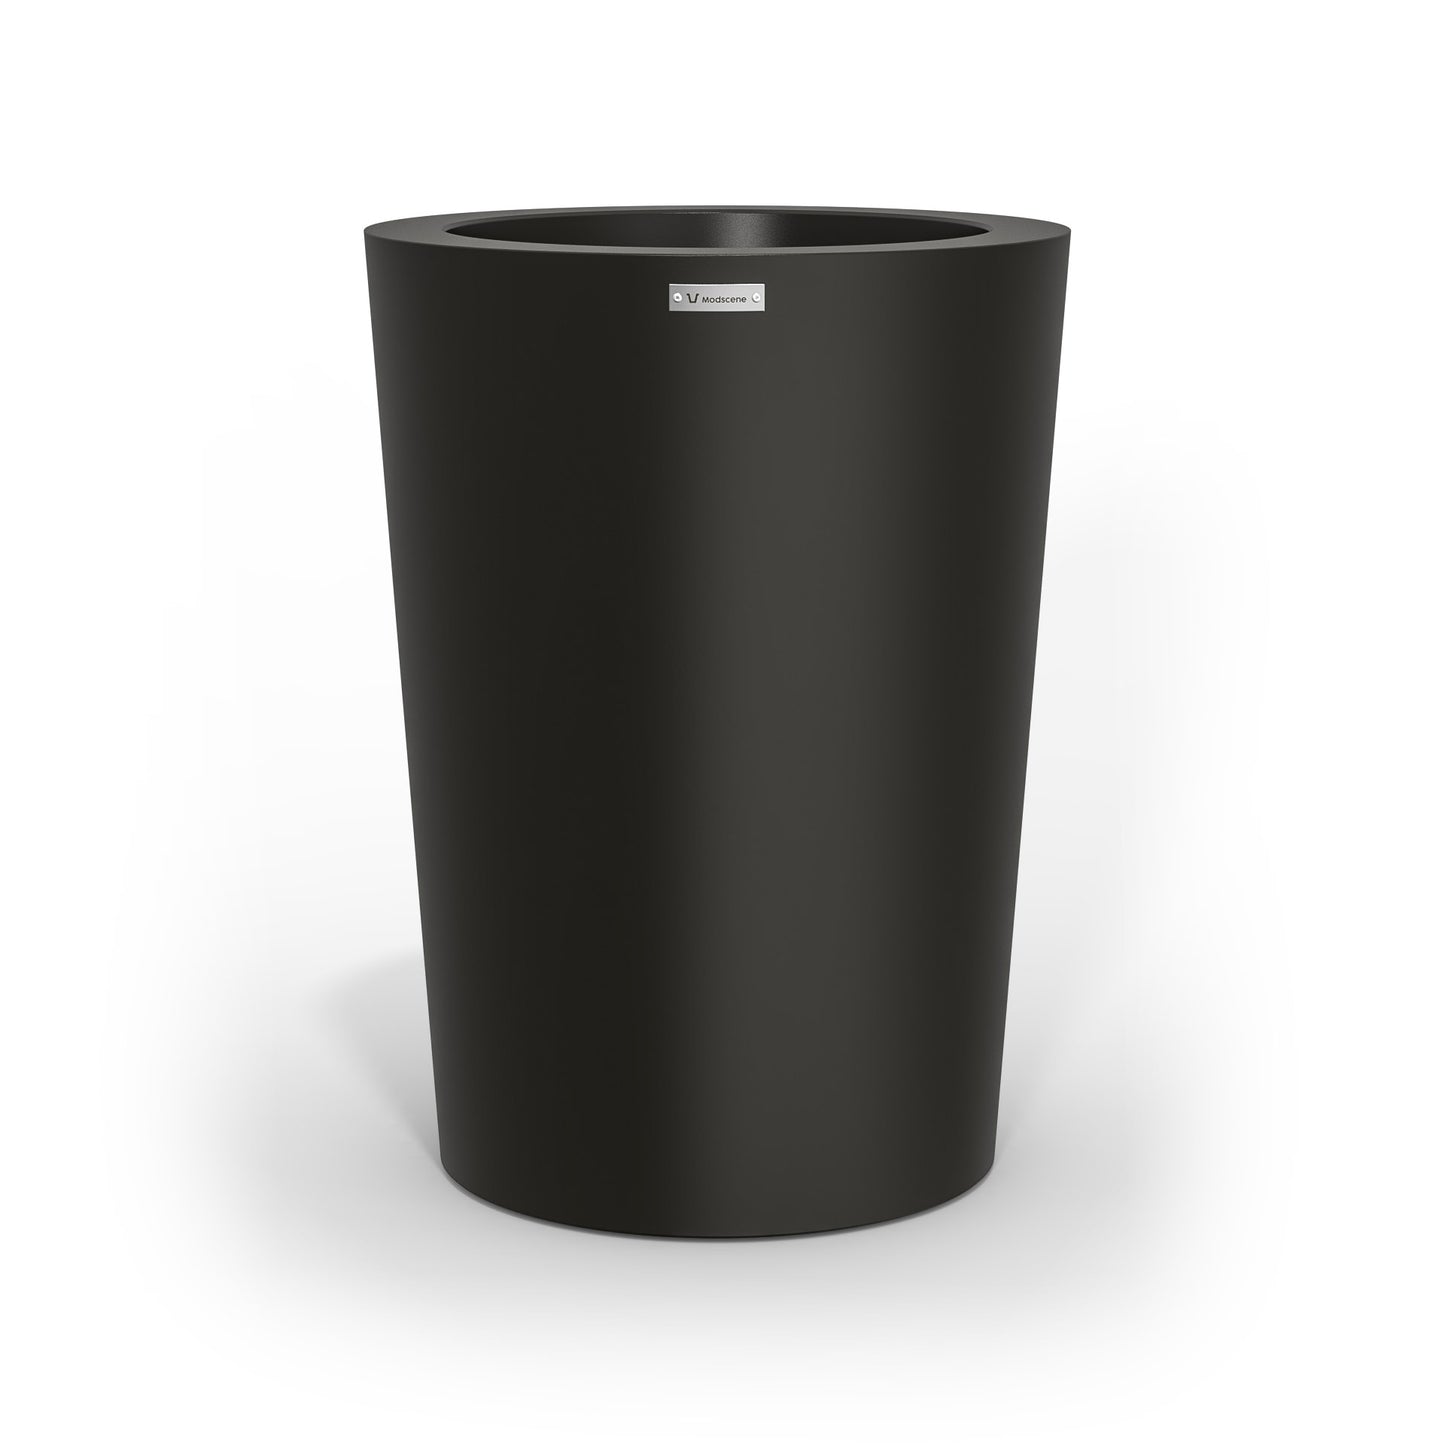 A modern style planter pot in black. Made by Modscene NZ.